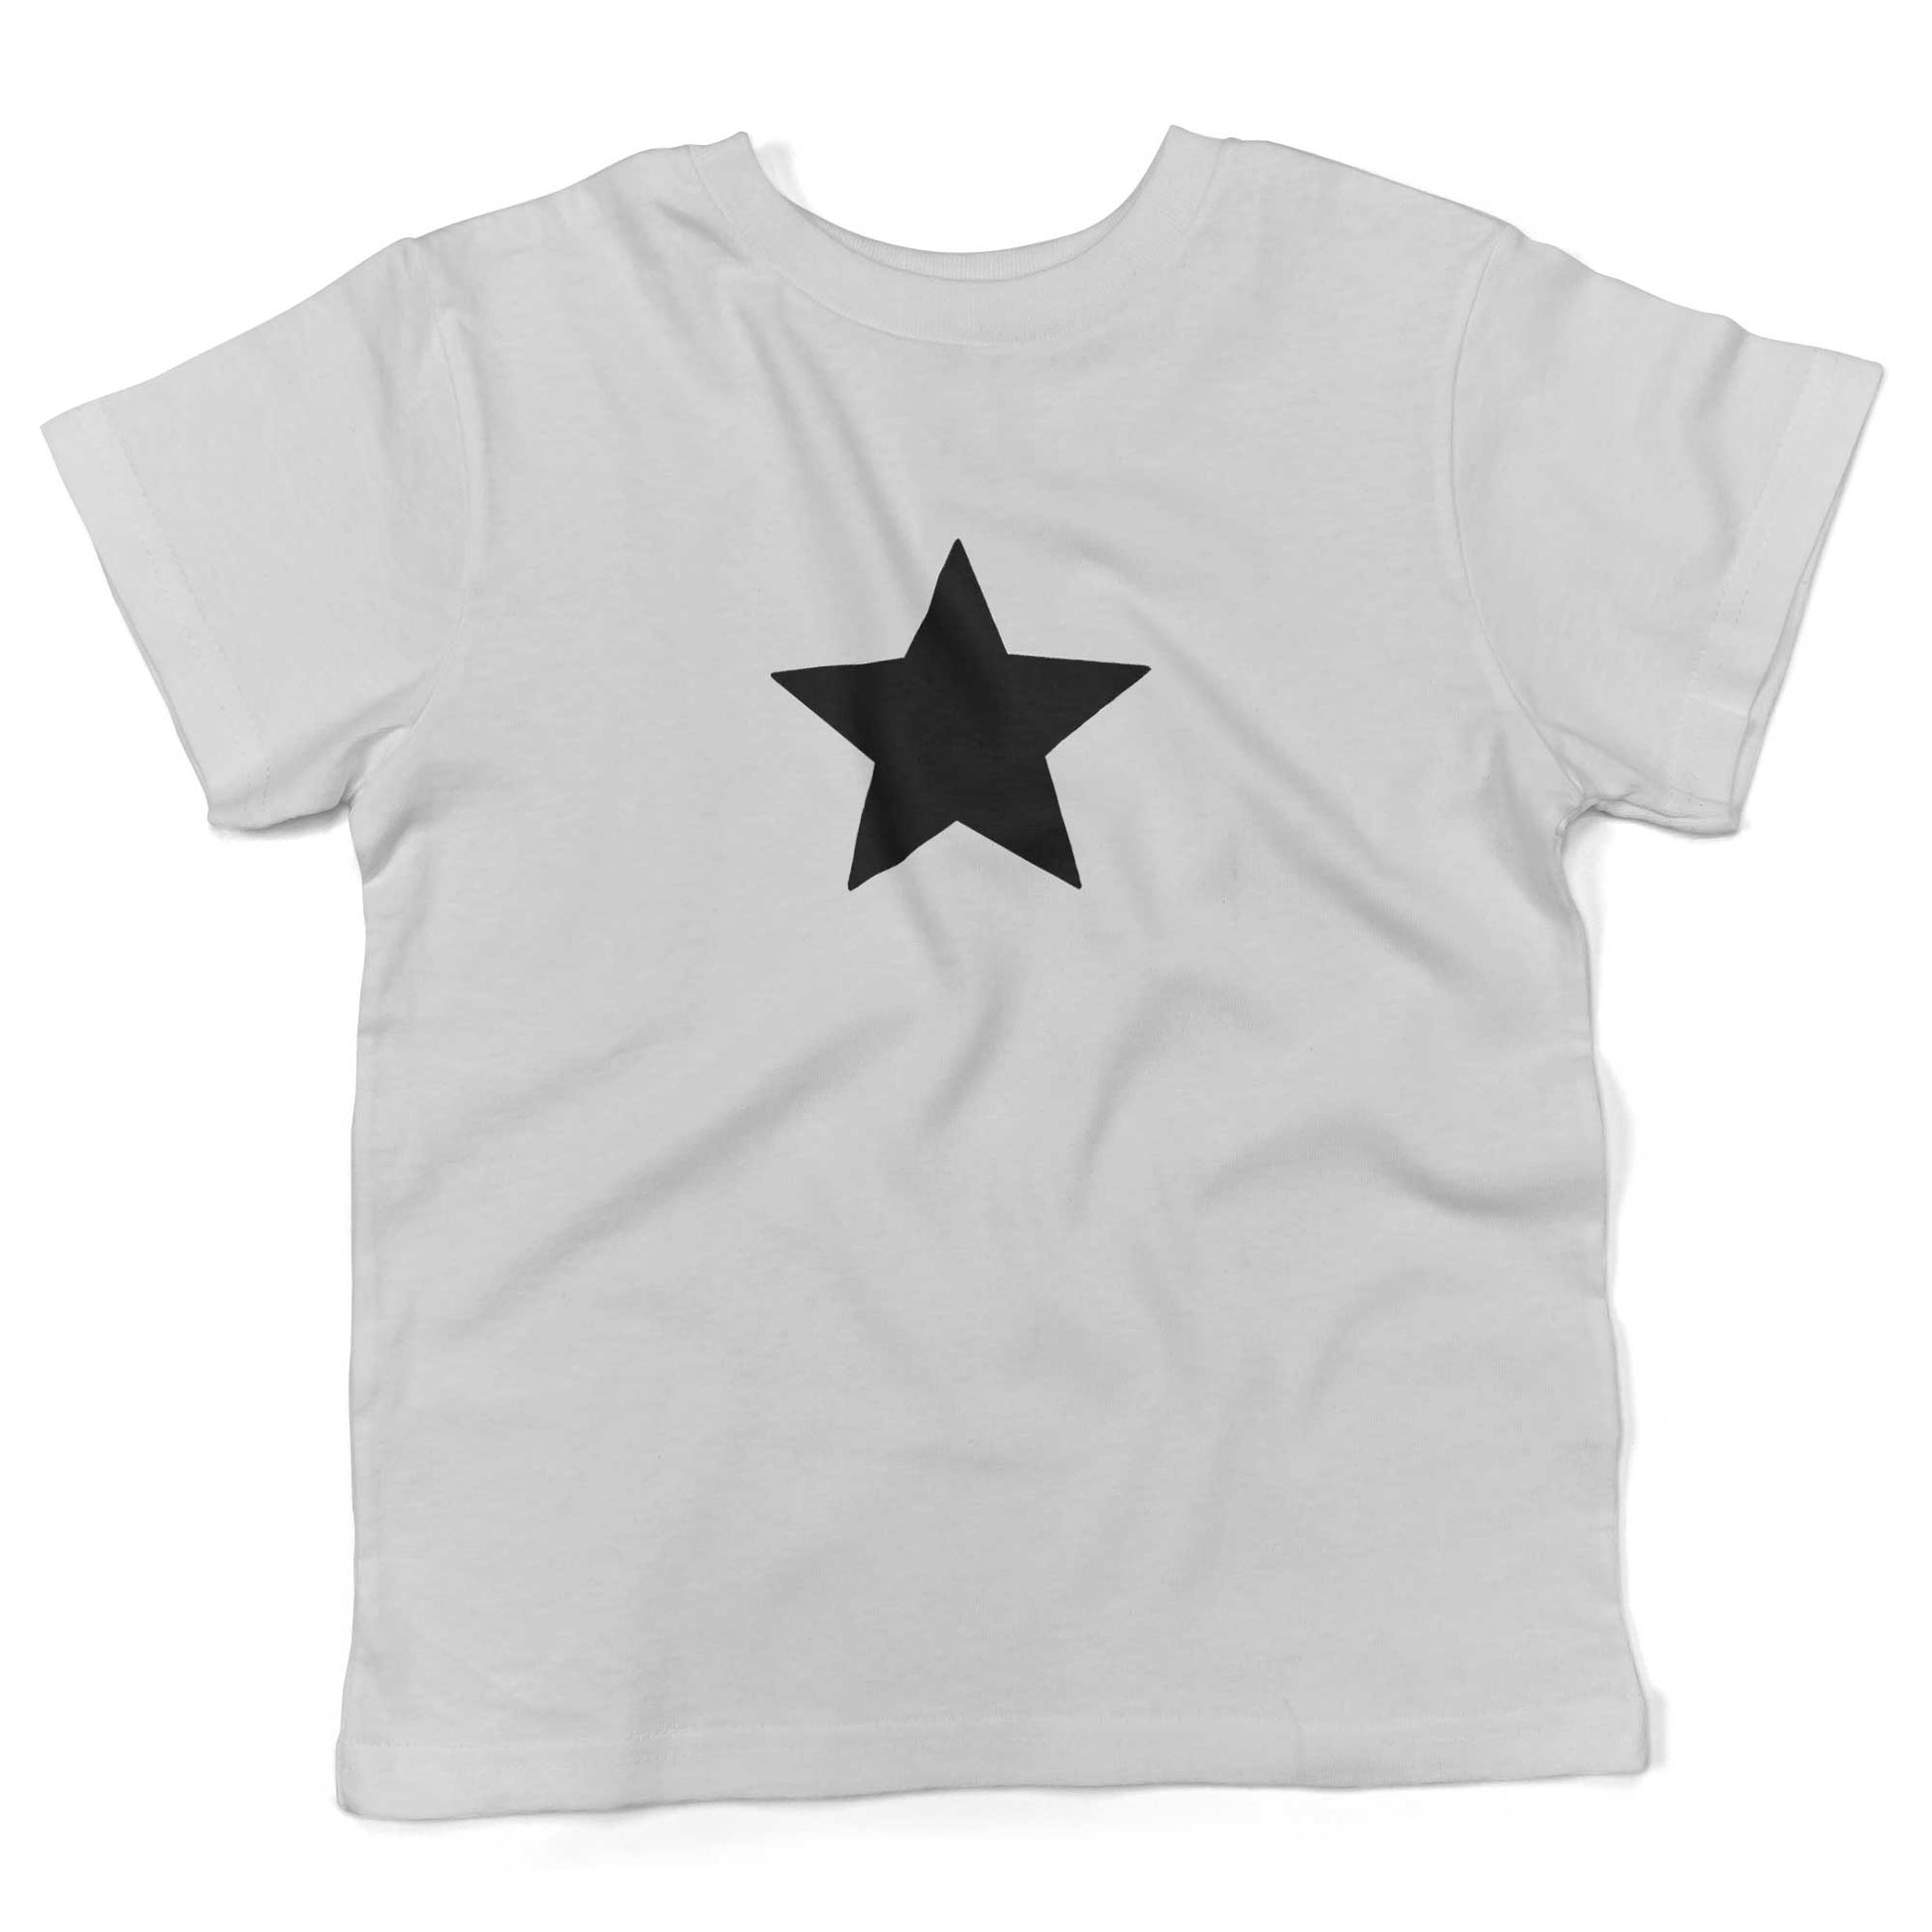 Five-Point Star Toddler Shirt-White-Black Star